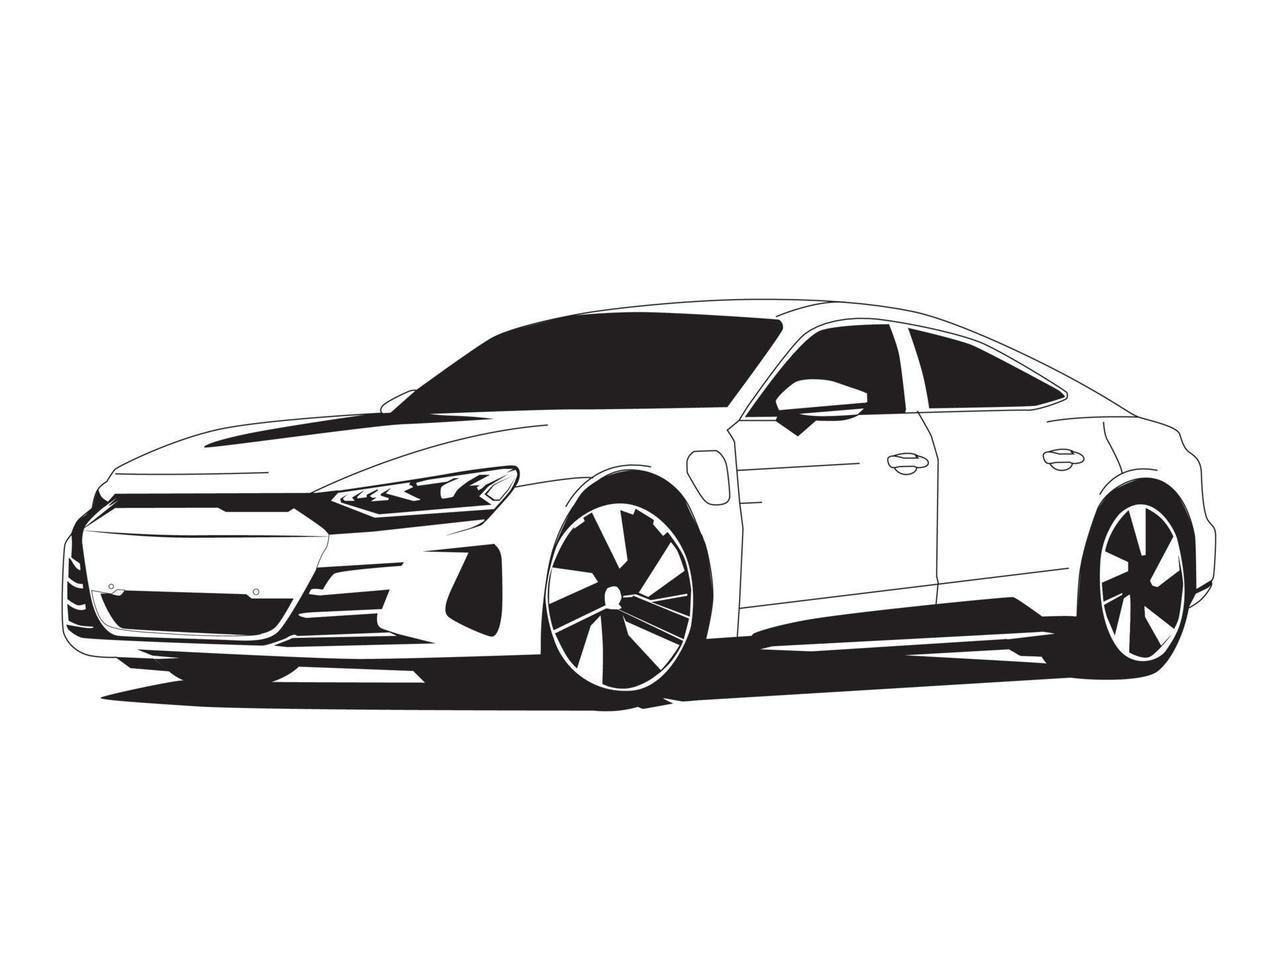 Car silhouette illustration vector